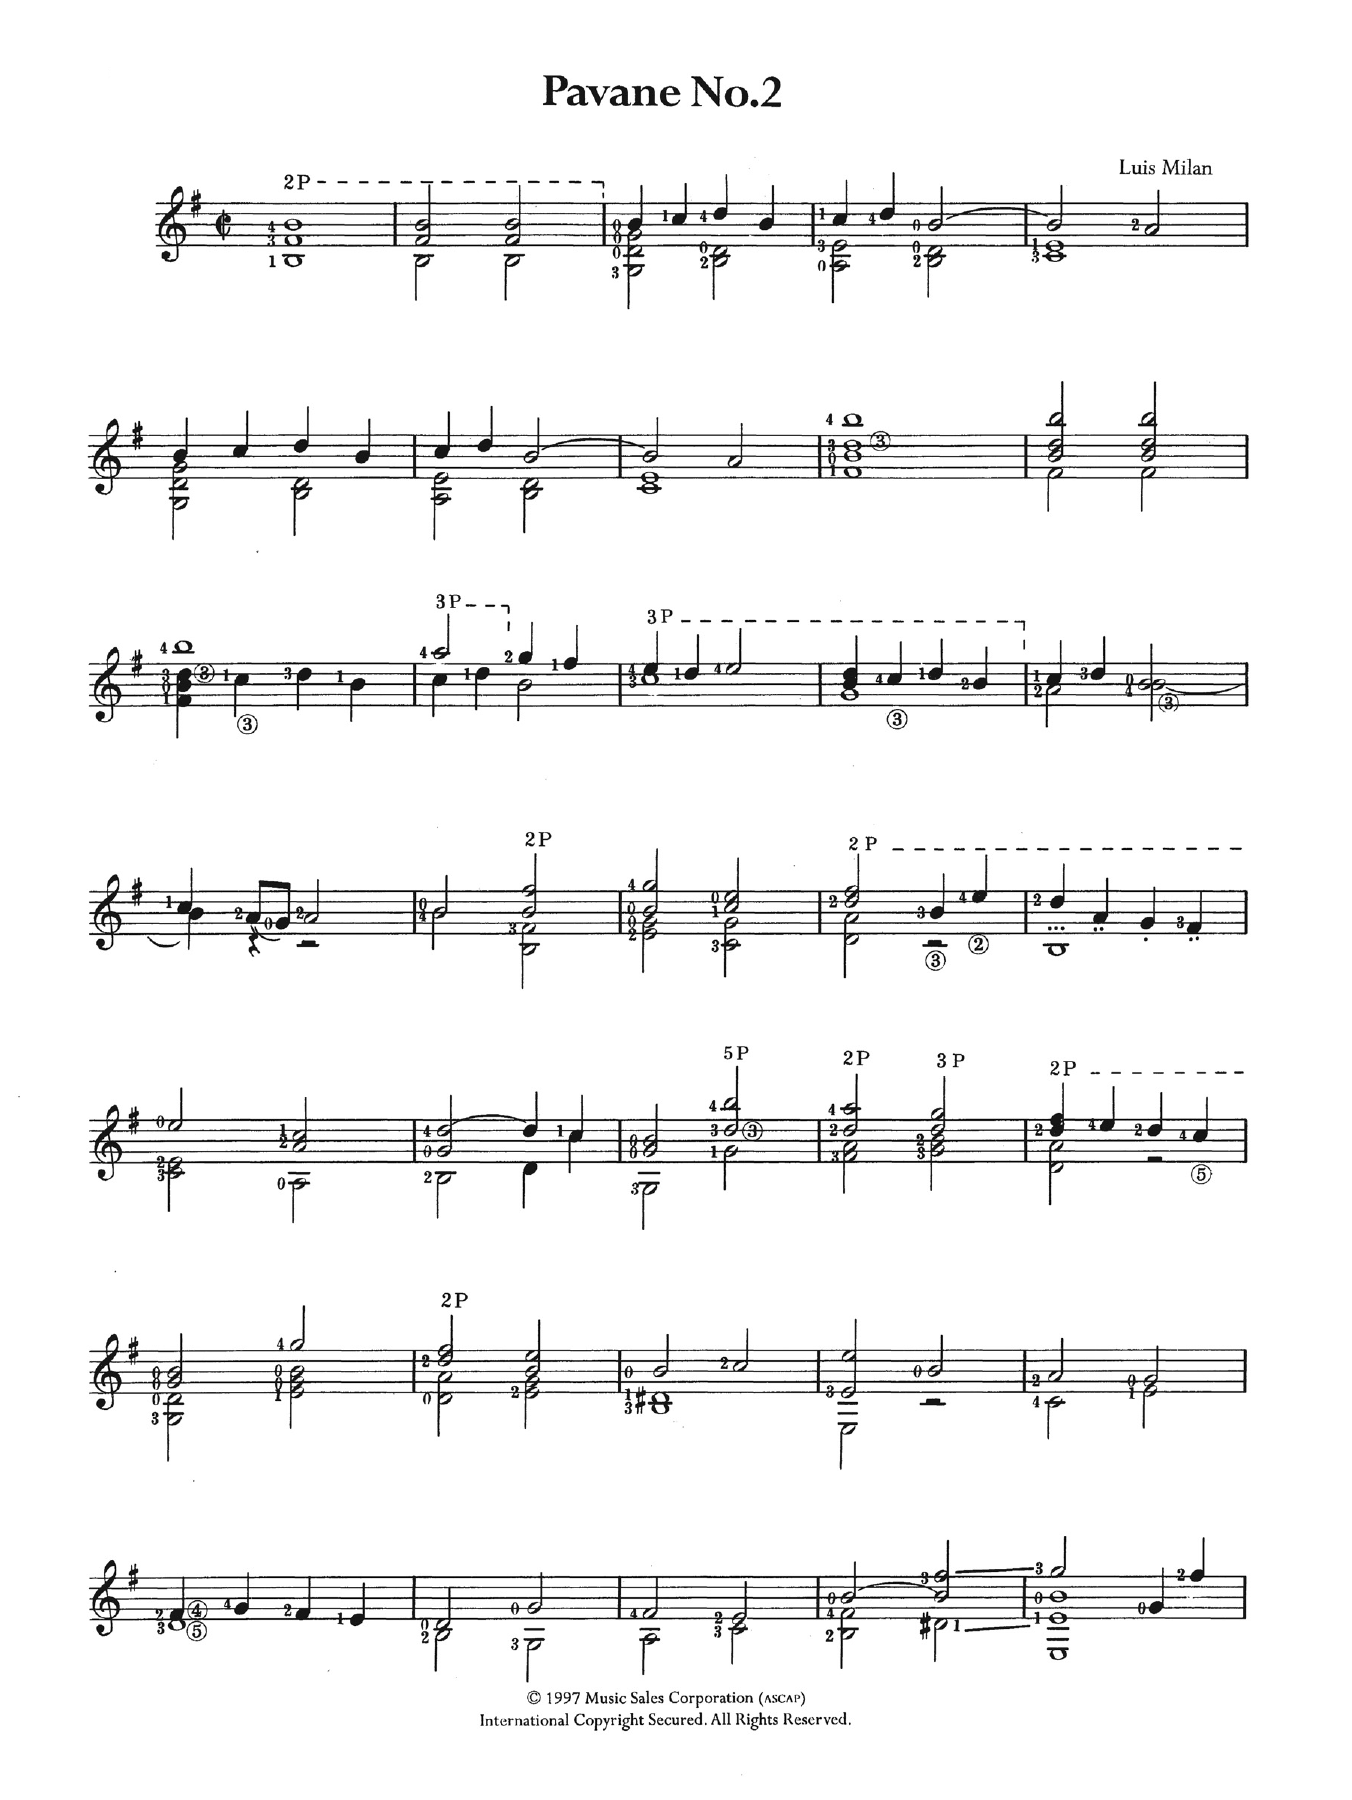 Luis de Milán Pavane No. 2 Sheet Music Notes & Chords for Guitar - Download or Print PDF